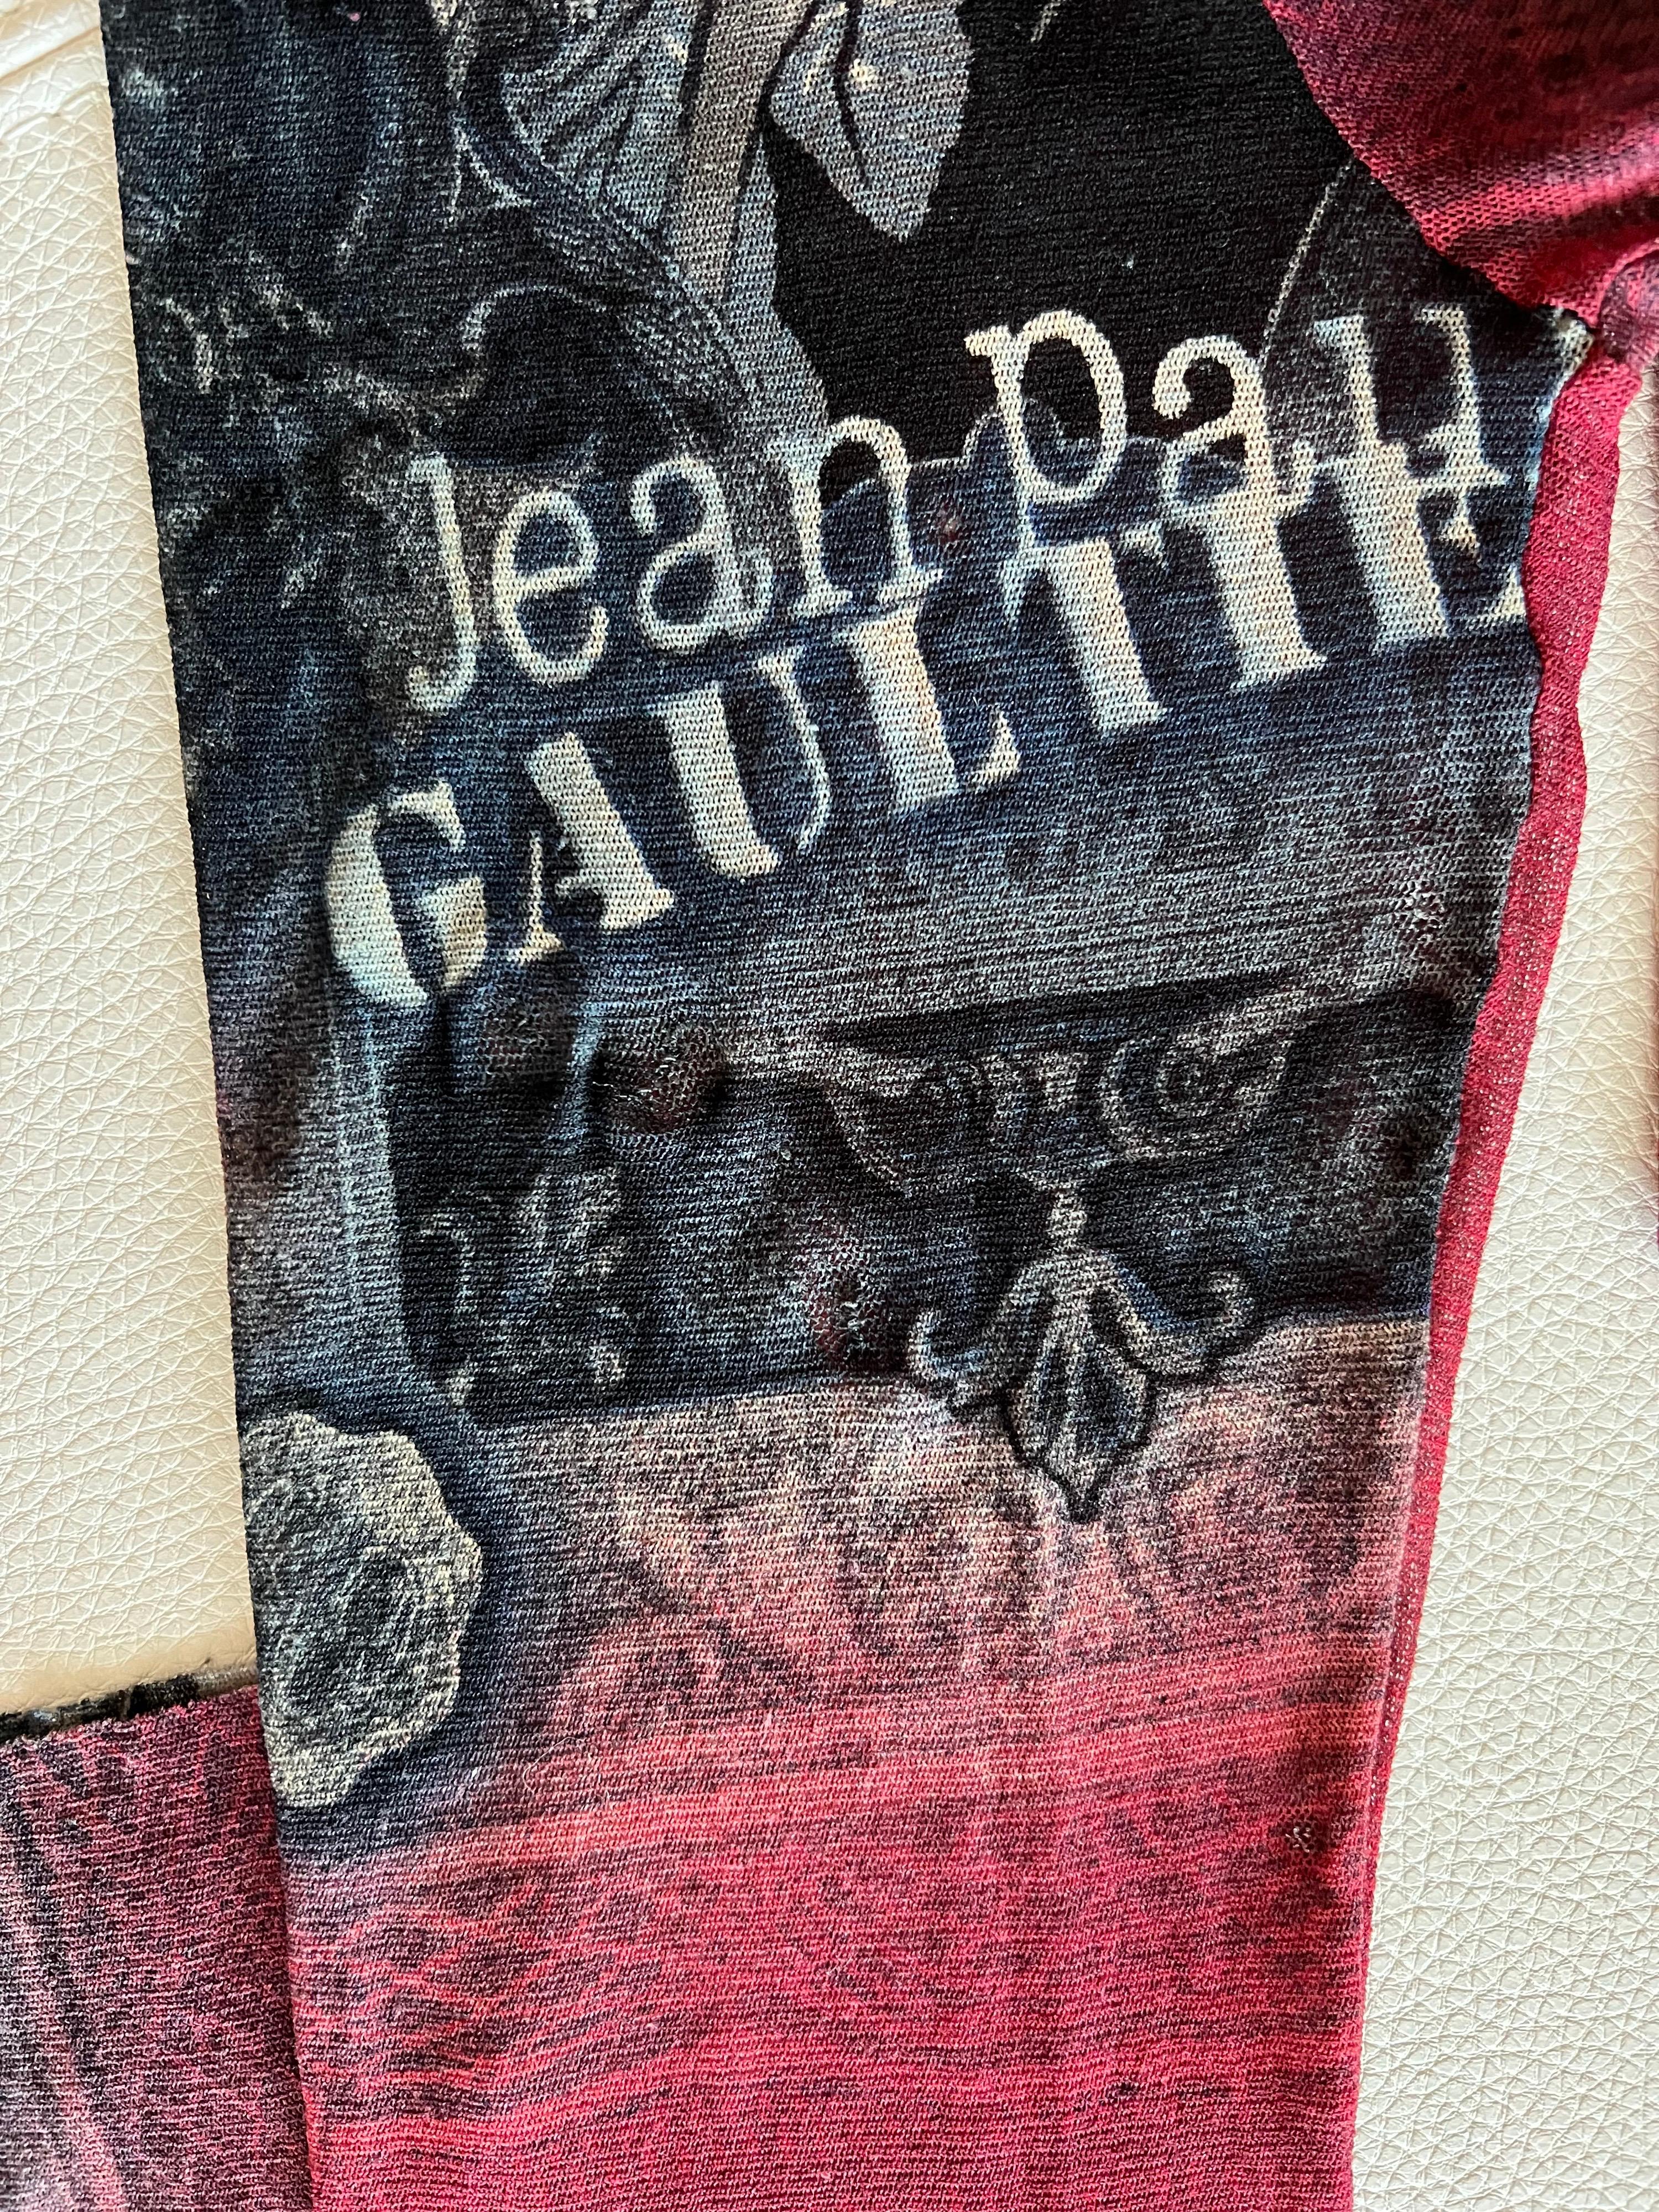 Jean Paul Gaultier c.1995 Vintage Sheer Mesh Top & Leggings Pants 2 Piece Set For Sale 7